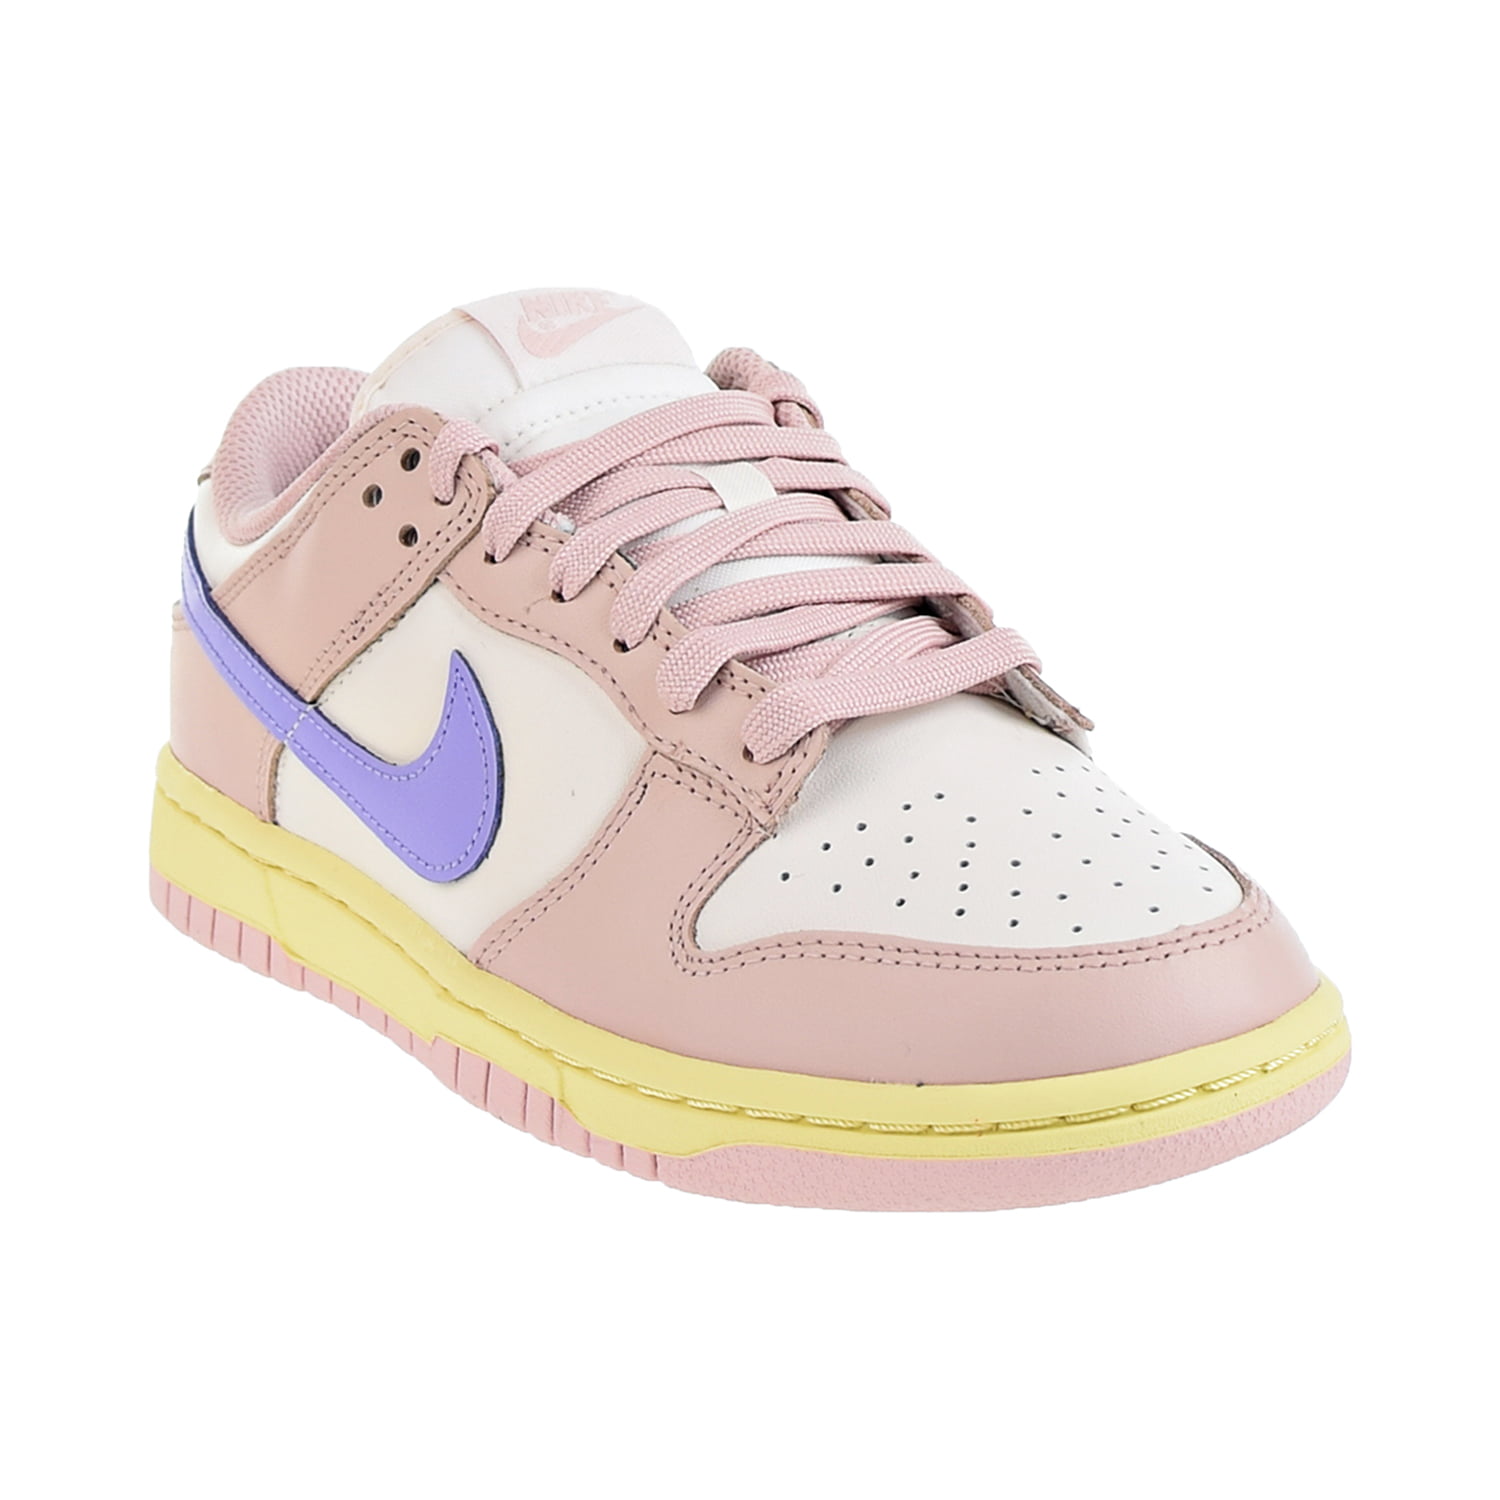 Nike Dunk Low Women's Shoes Pink Oxford-Light Thistle-Phantom dd1503-601